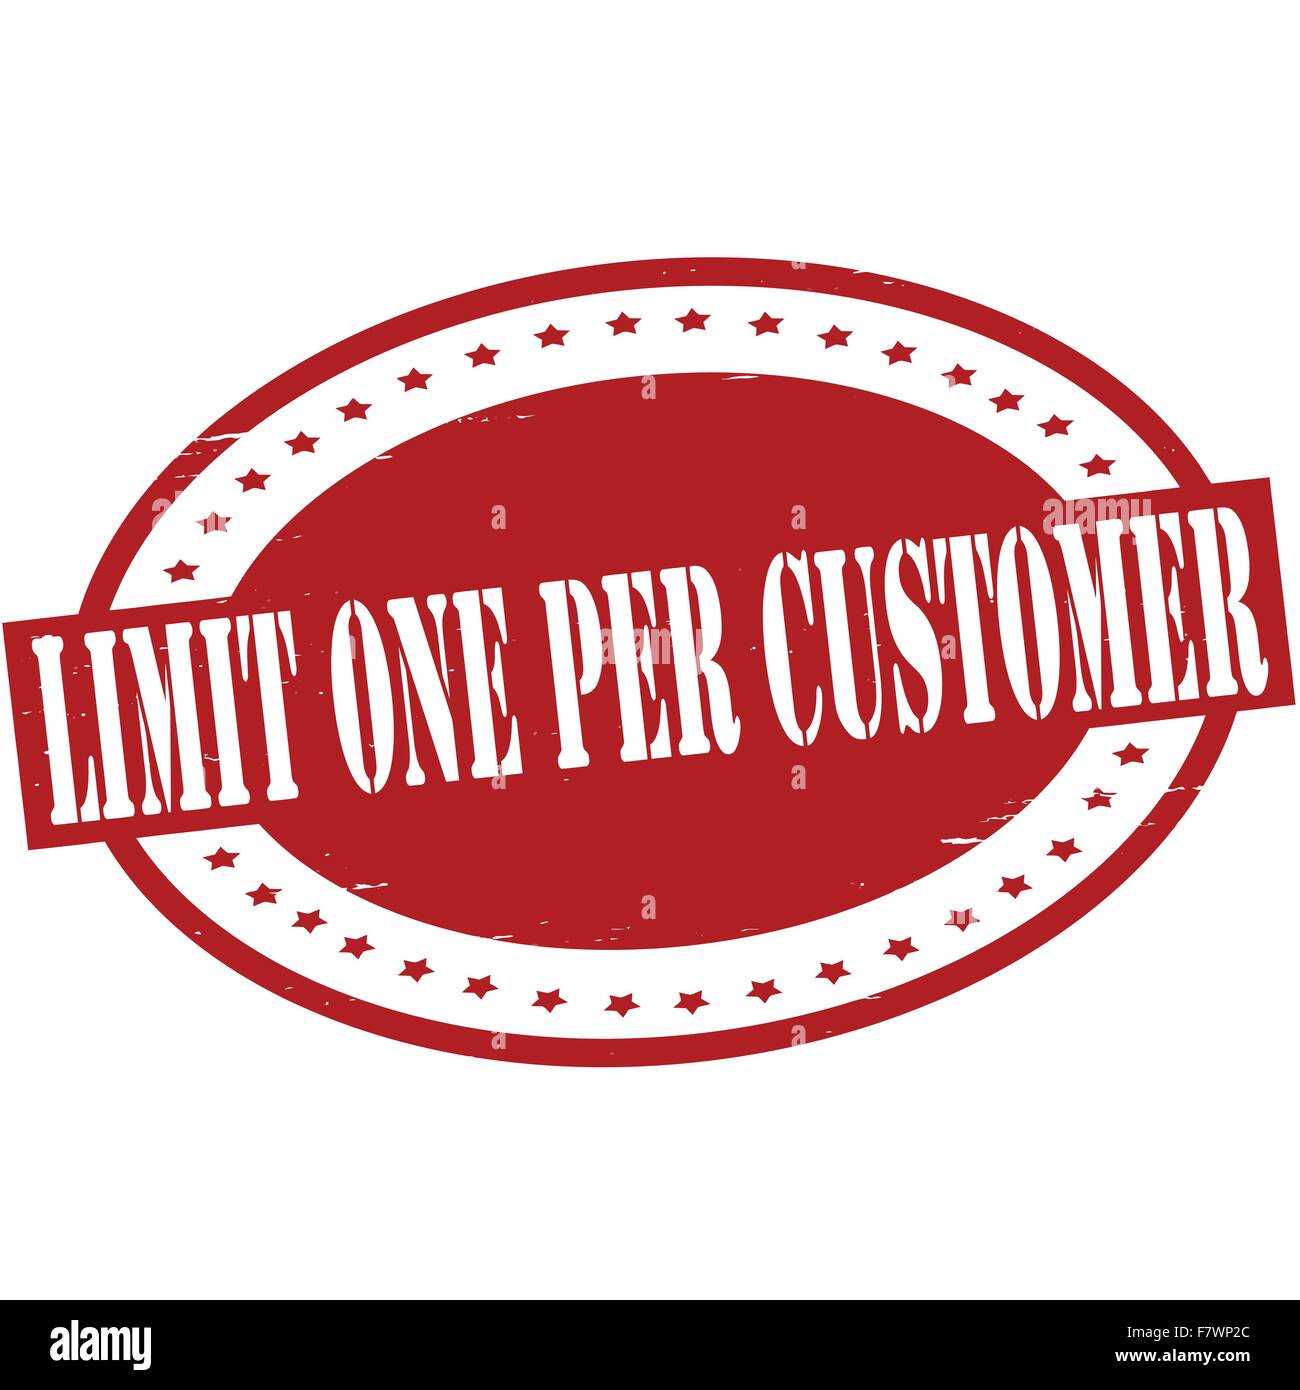 Limit one per customer Stock Vector